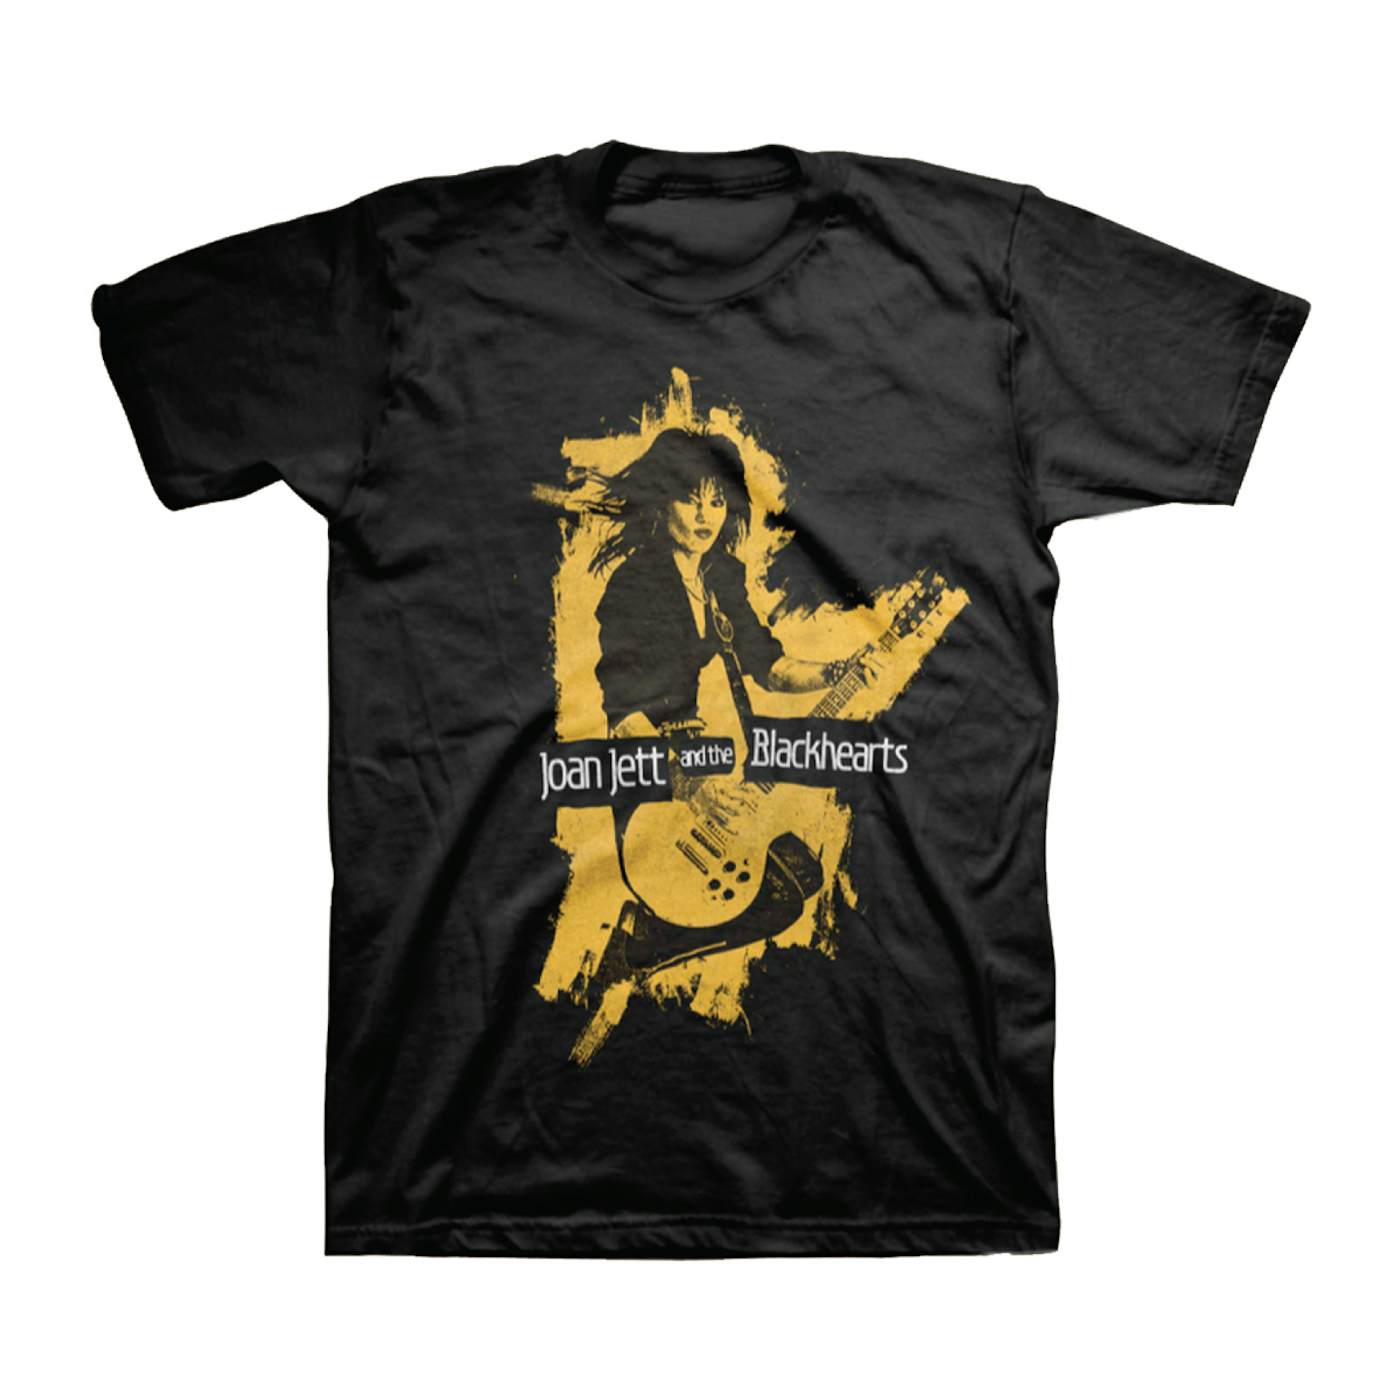 Joan Jett & The Blackhearts Yellow Silhouette T-shirt